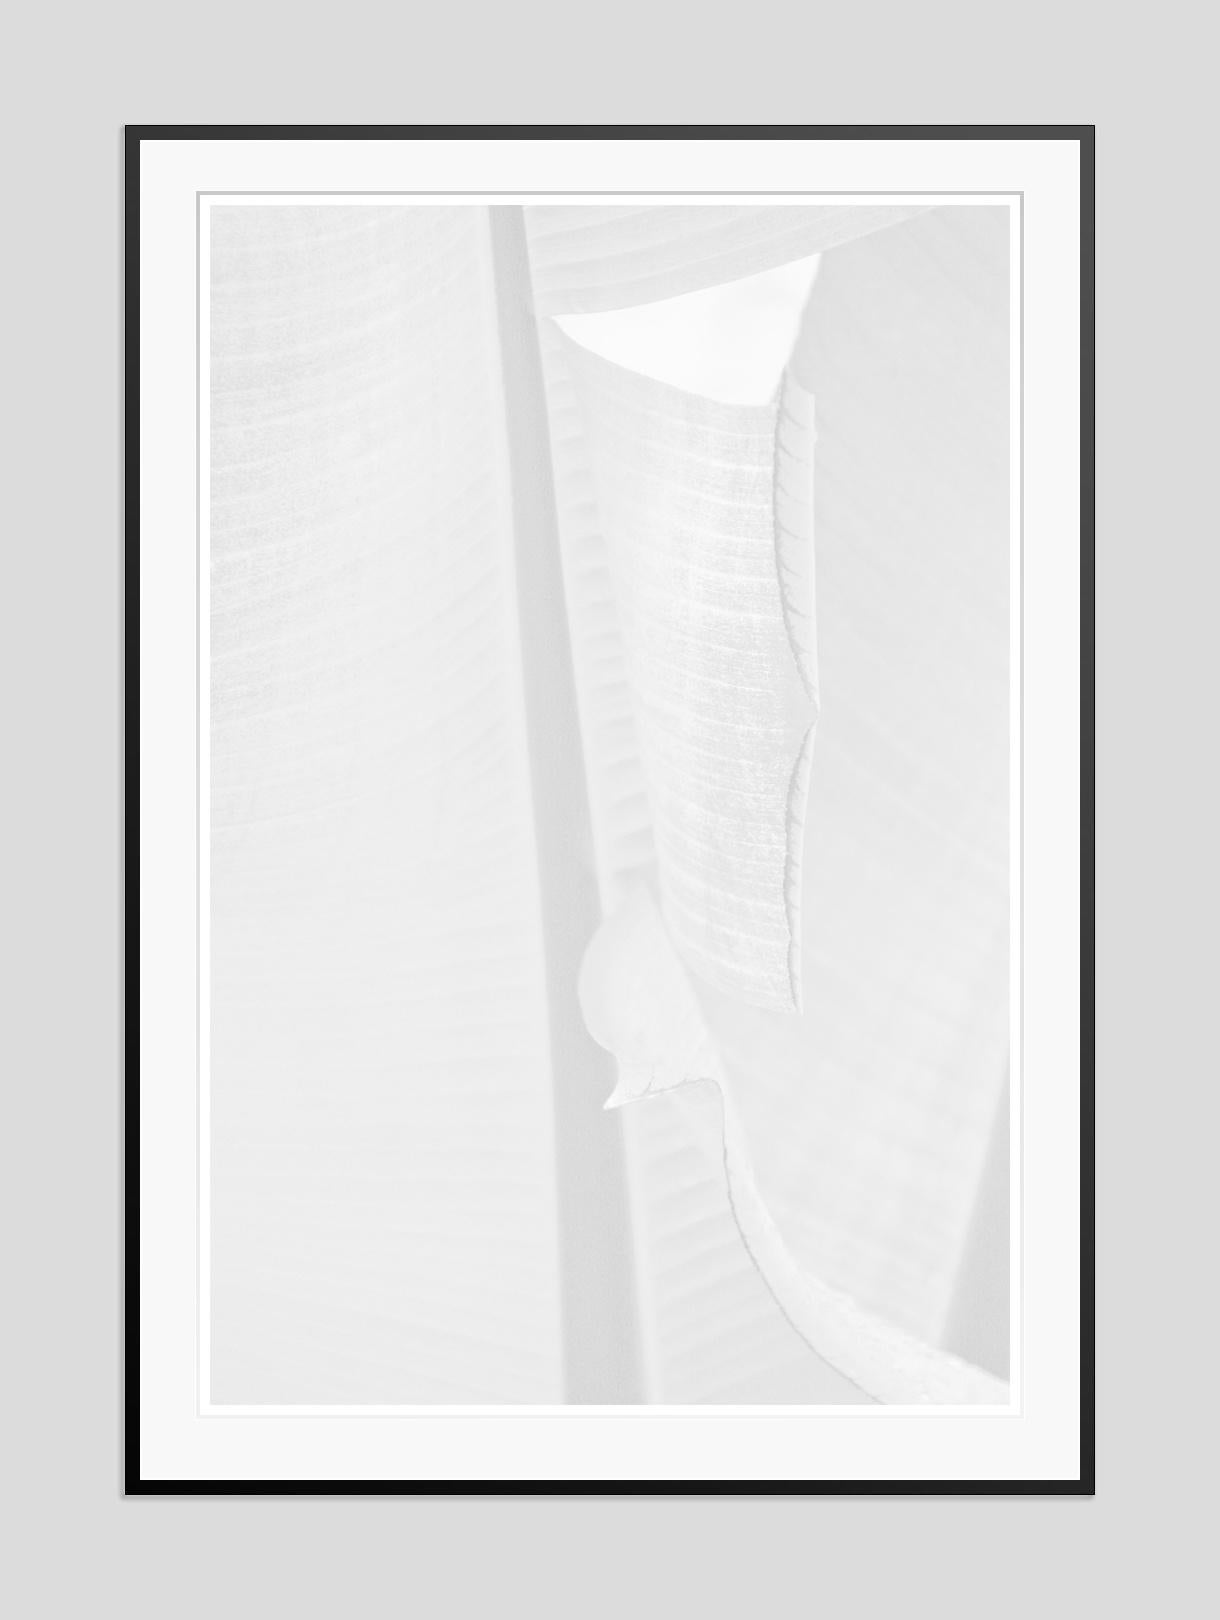 White Leaf -  Oversize Signed Limited Edition Print  - Modern Photograph by Stuart Möller